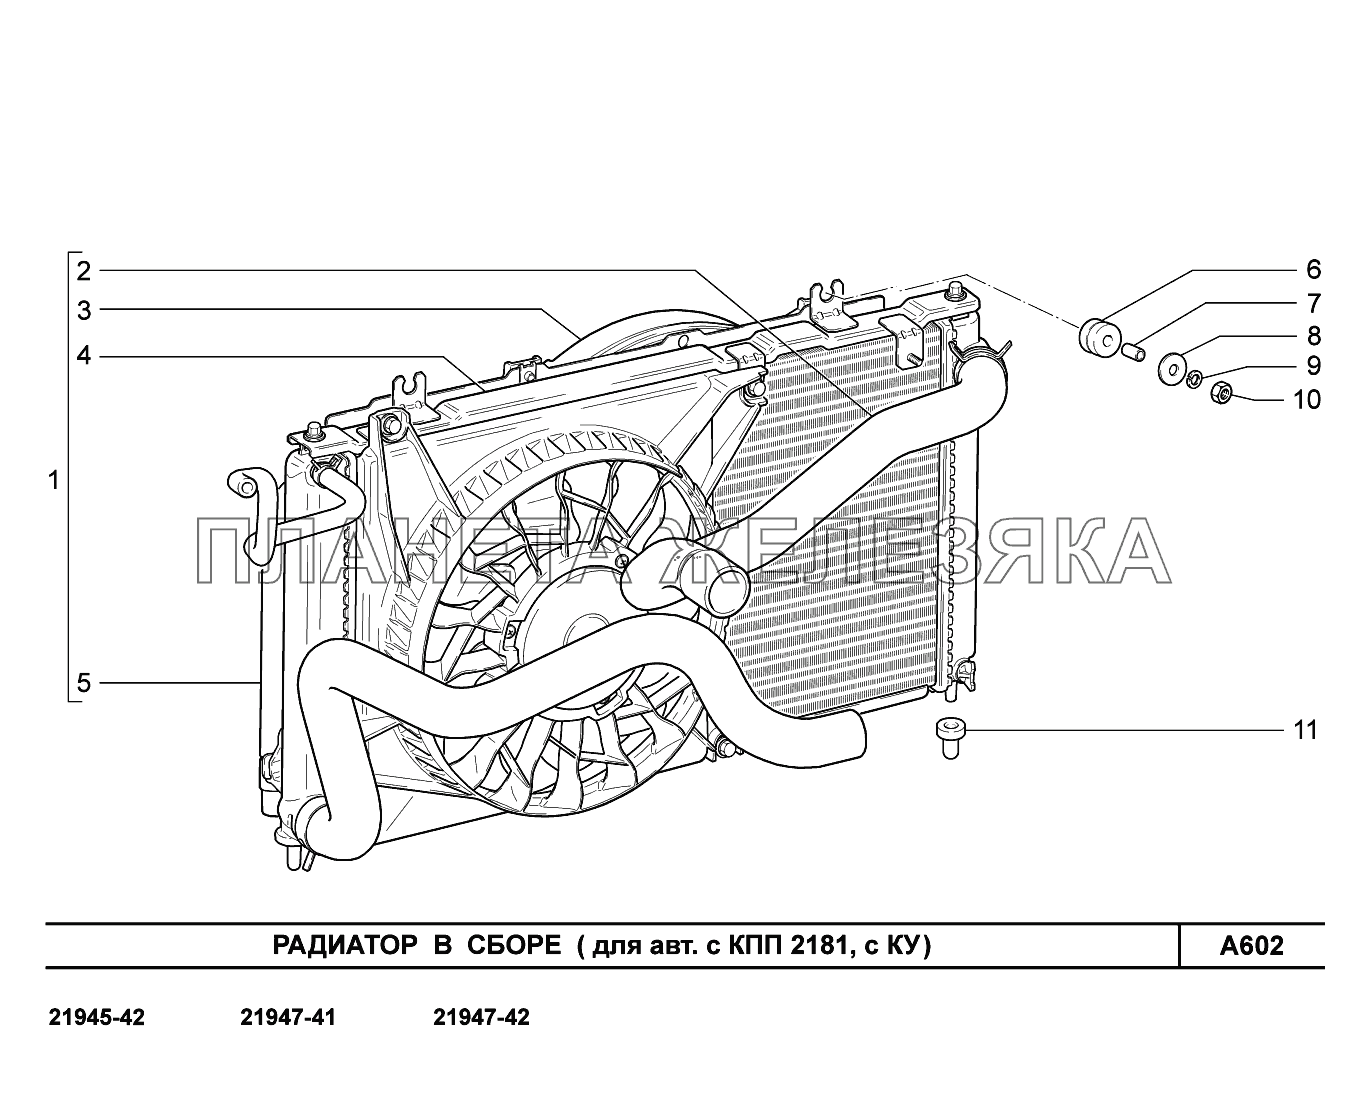 A602. Радиатор в сборе (для авт. с КПП 2181, с КУ) Lada Kalina New 2194